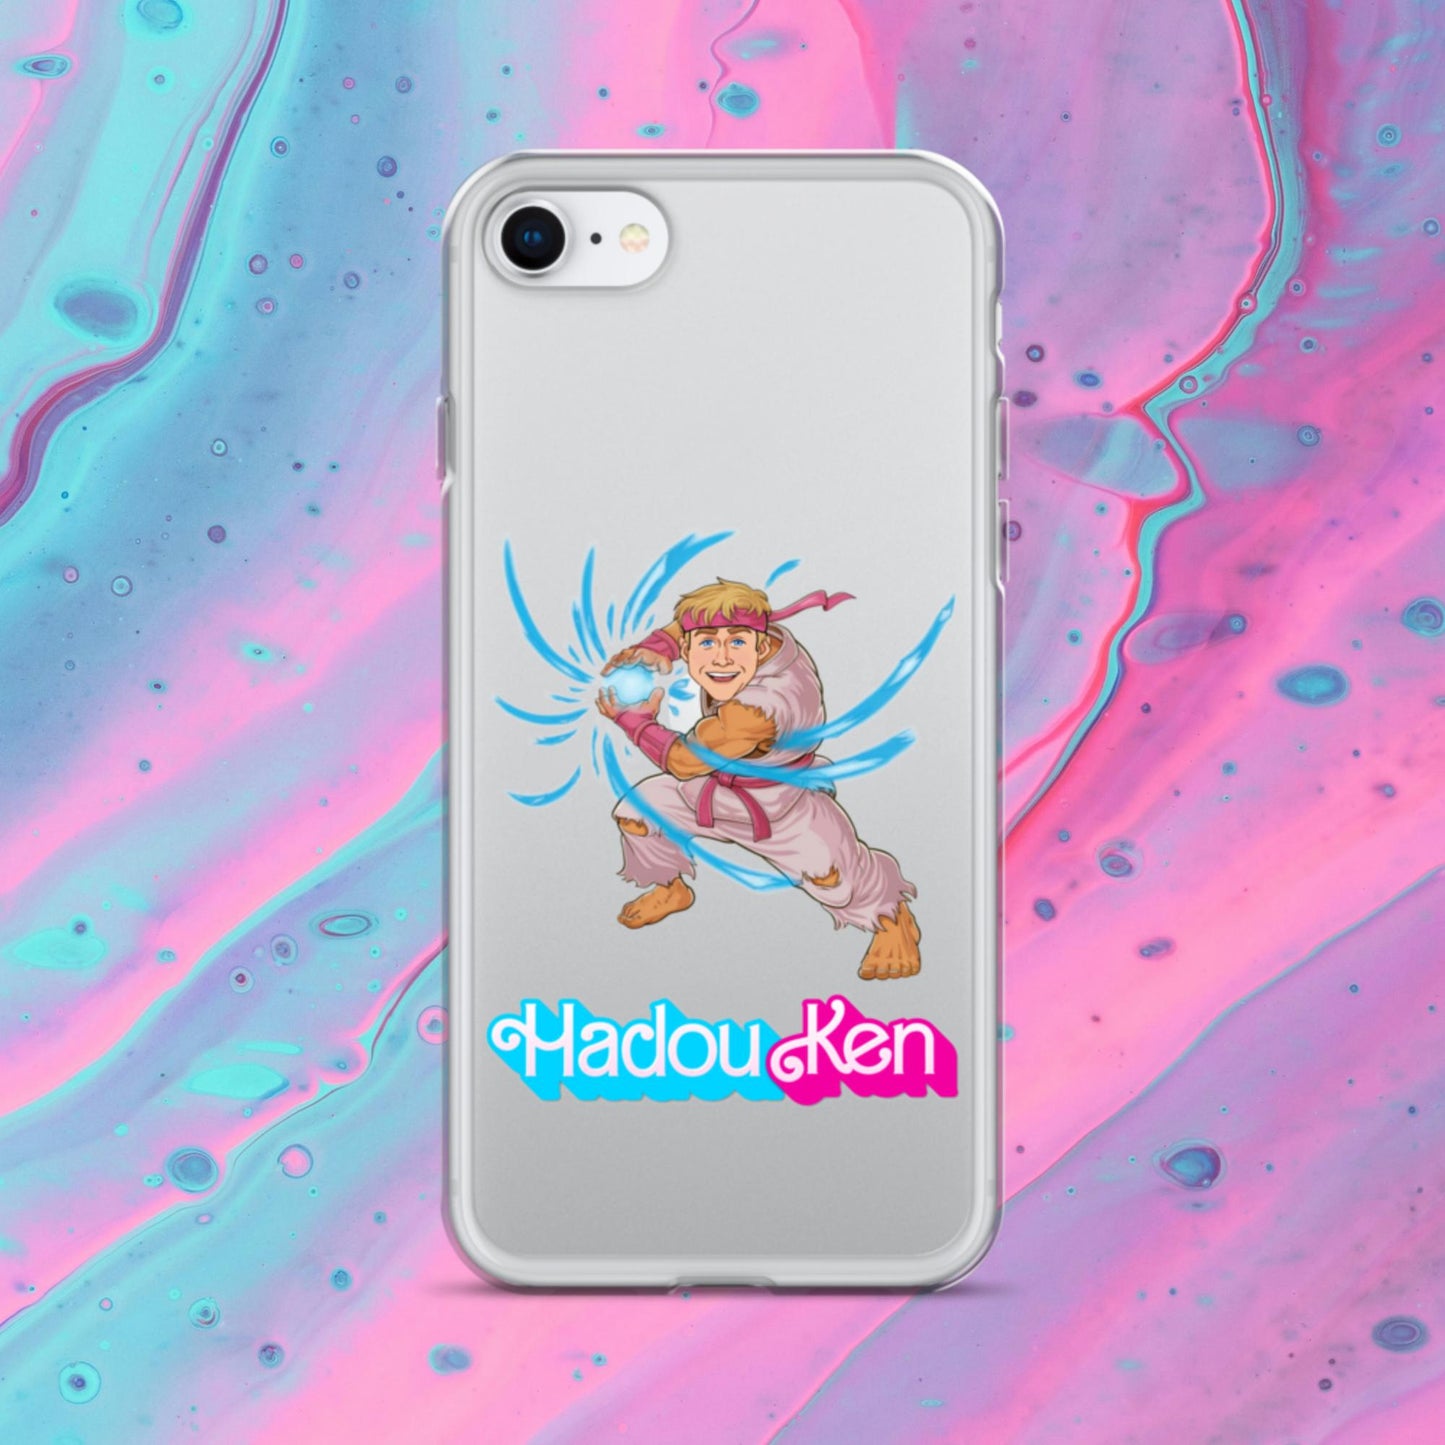 Hadouken Ken Barbie Ryan Gosling Street Fighter Funny Clear Case for iPhone